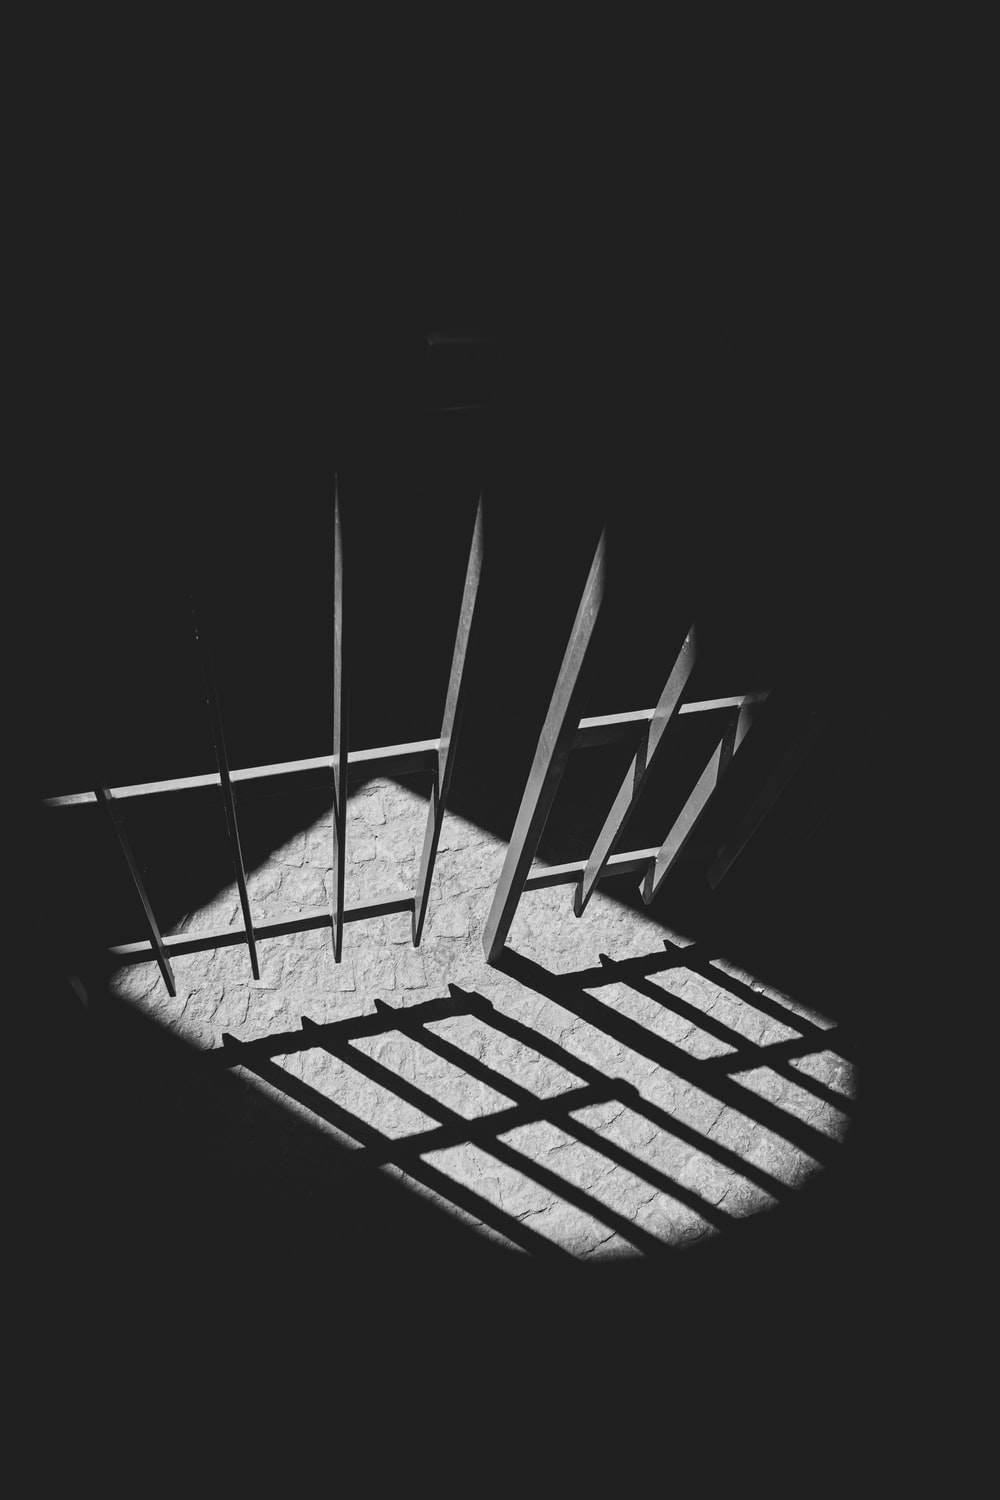 Prison Picture. Download Free Image